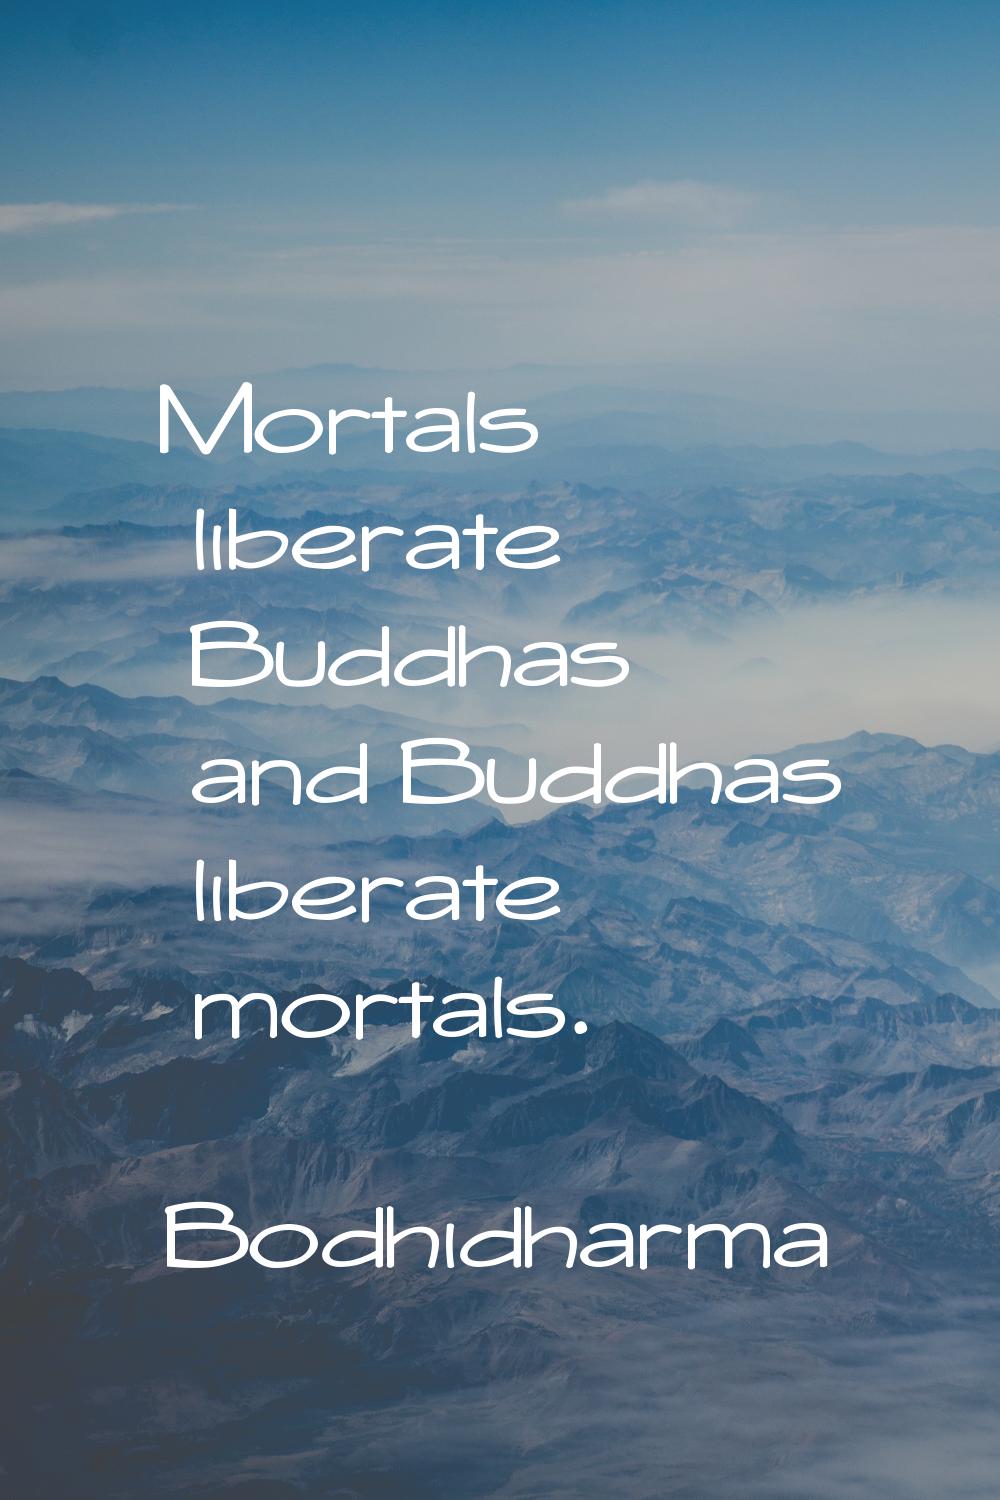 Mortals liberate Buddhas and Buddhas liberate mortals.